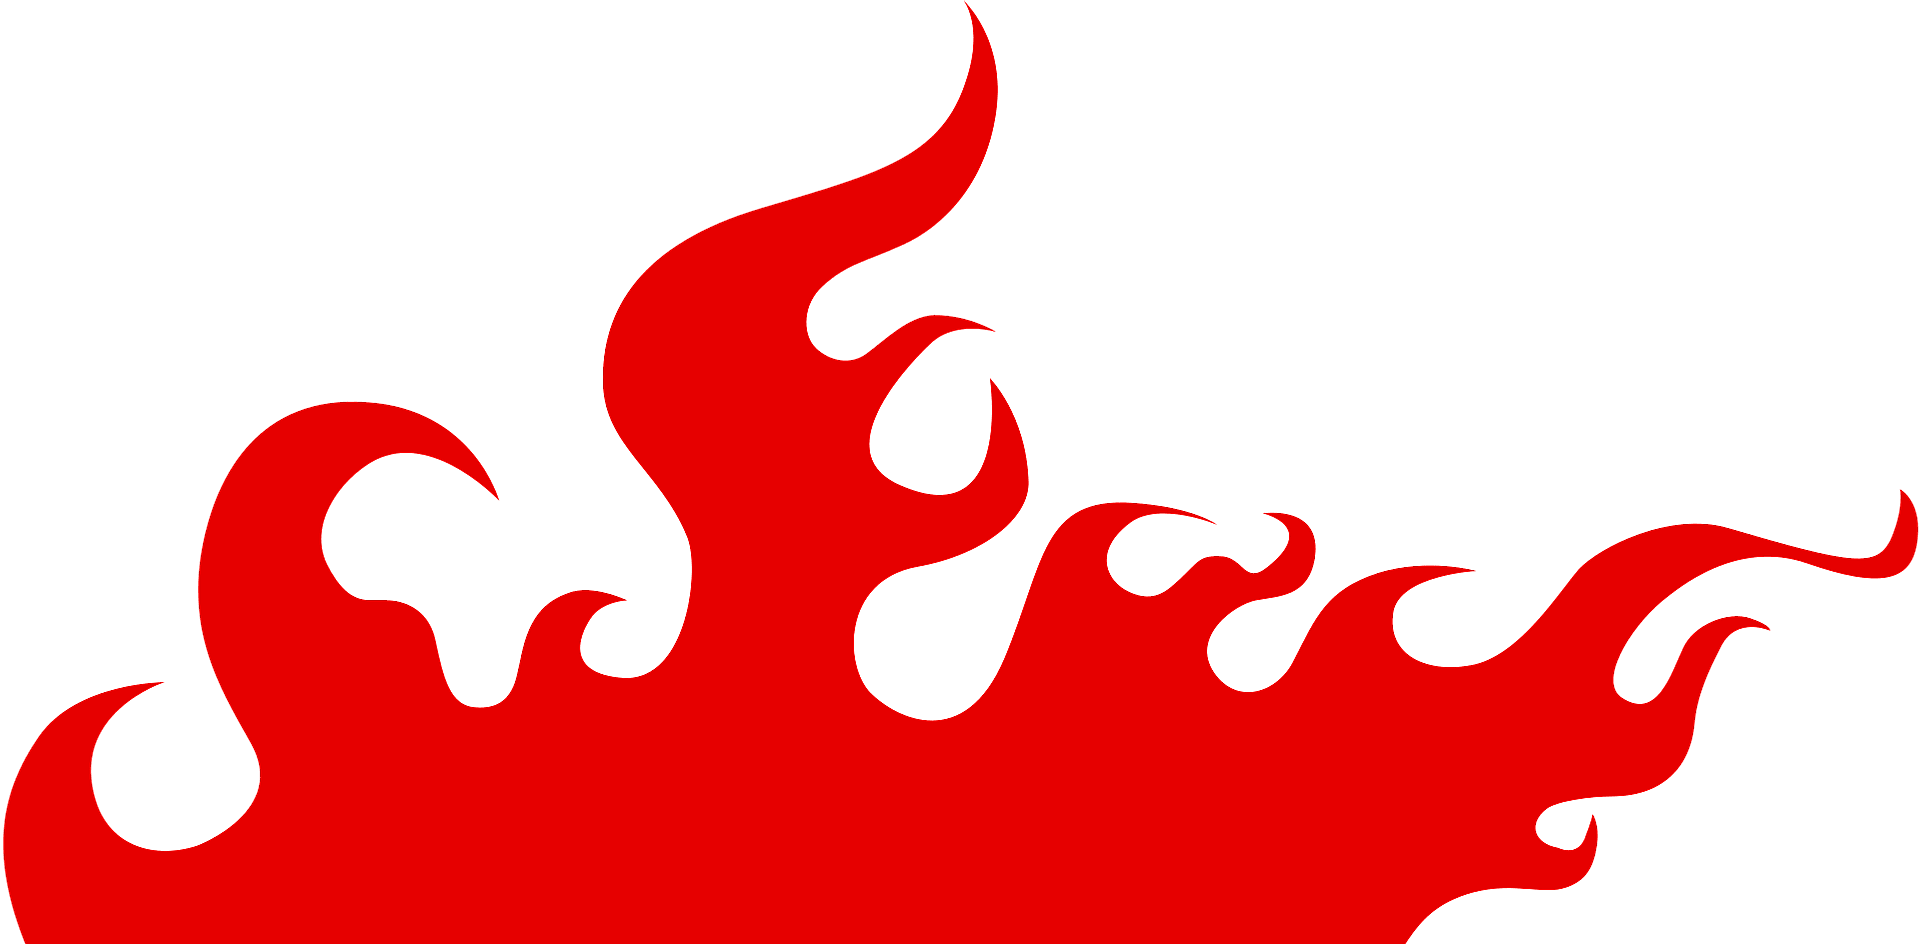 Fire Flames SVG Flames Clipart Flames Silhouette Cut File - Clipart ...